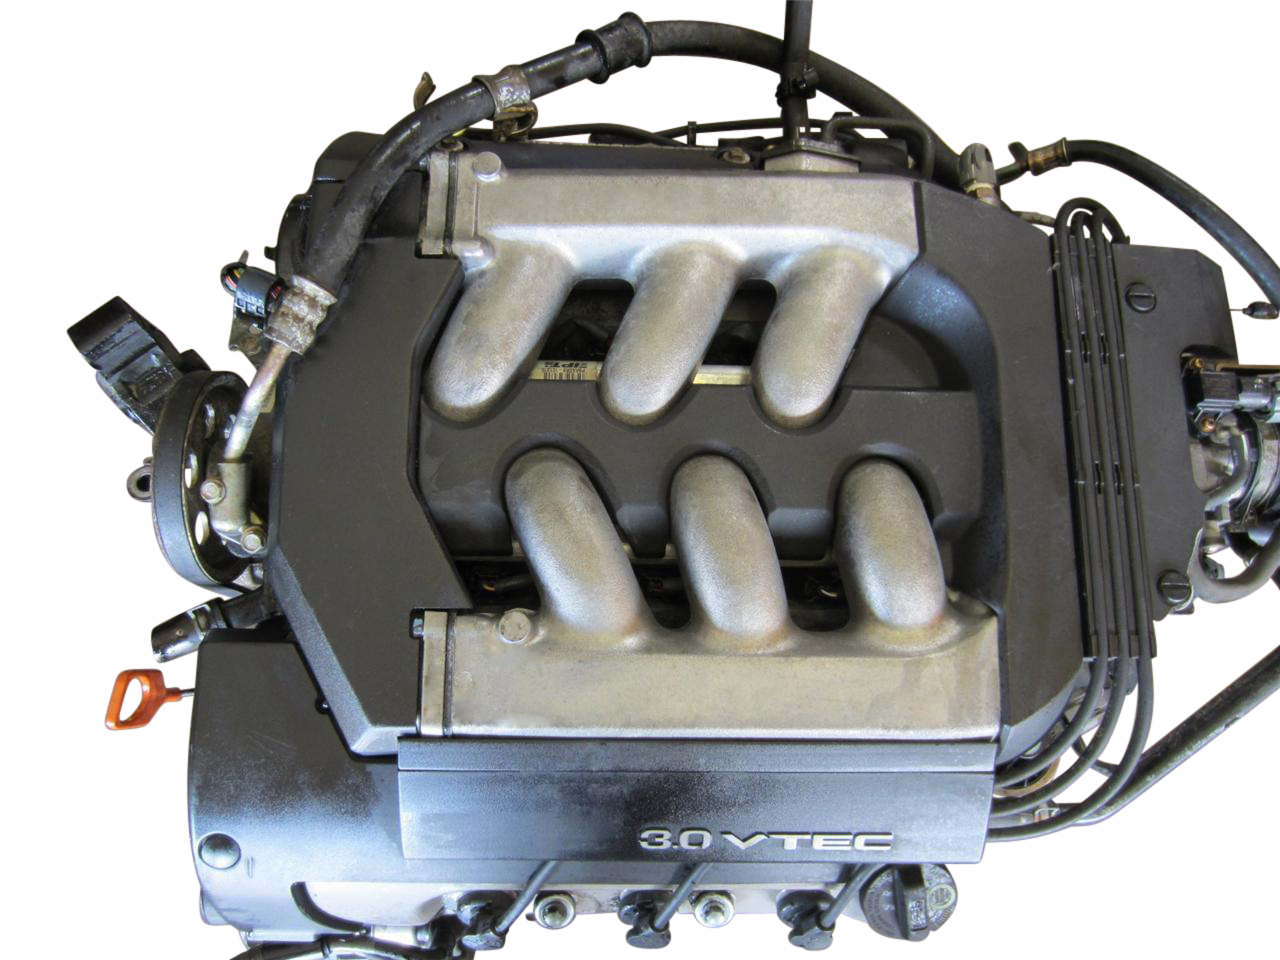 2000 honda accord 3.0 vtec engine